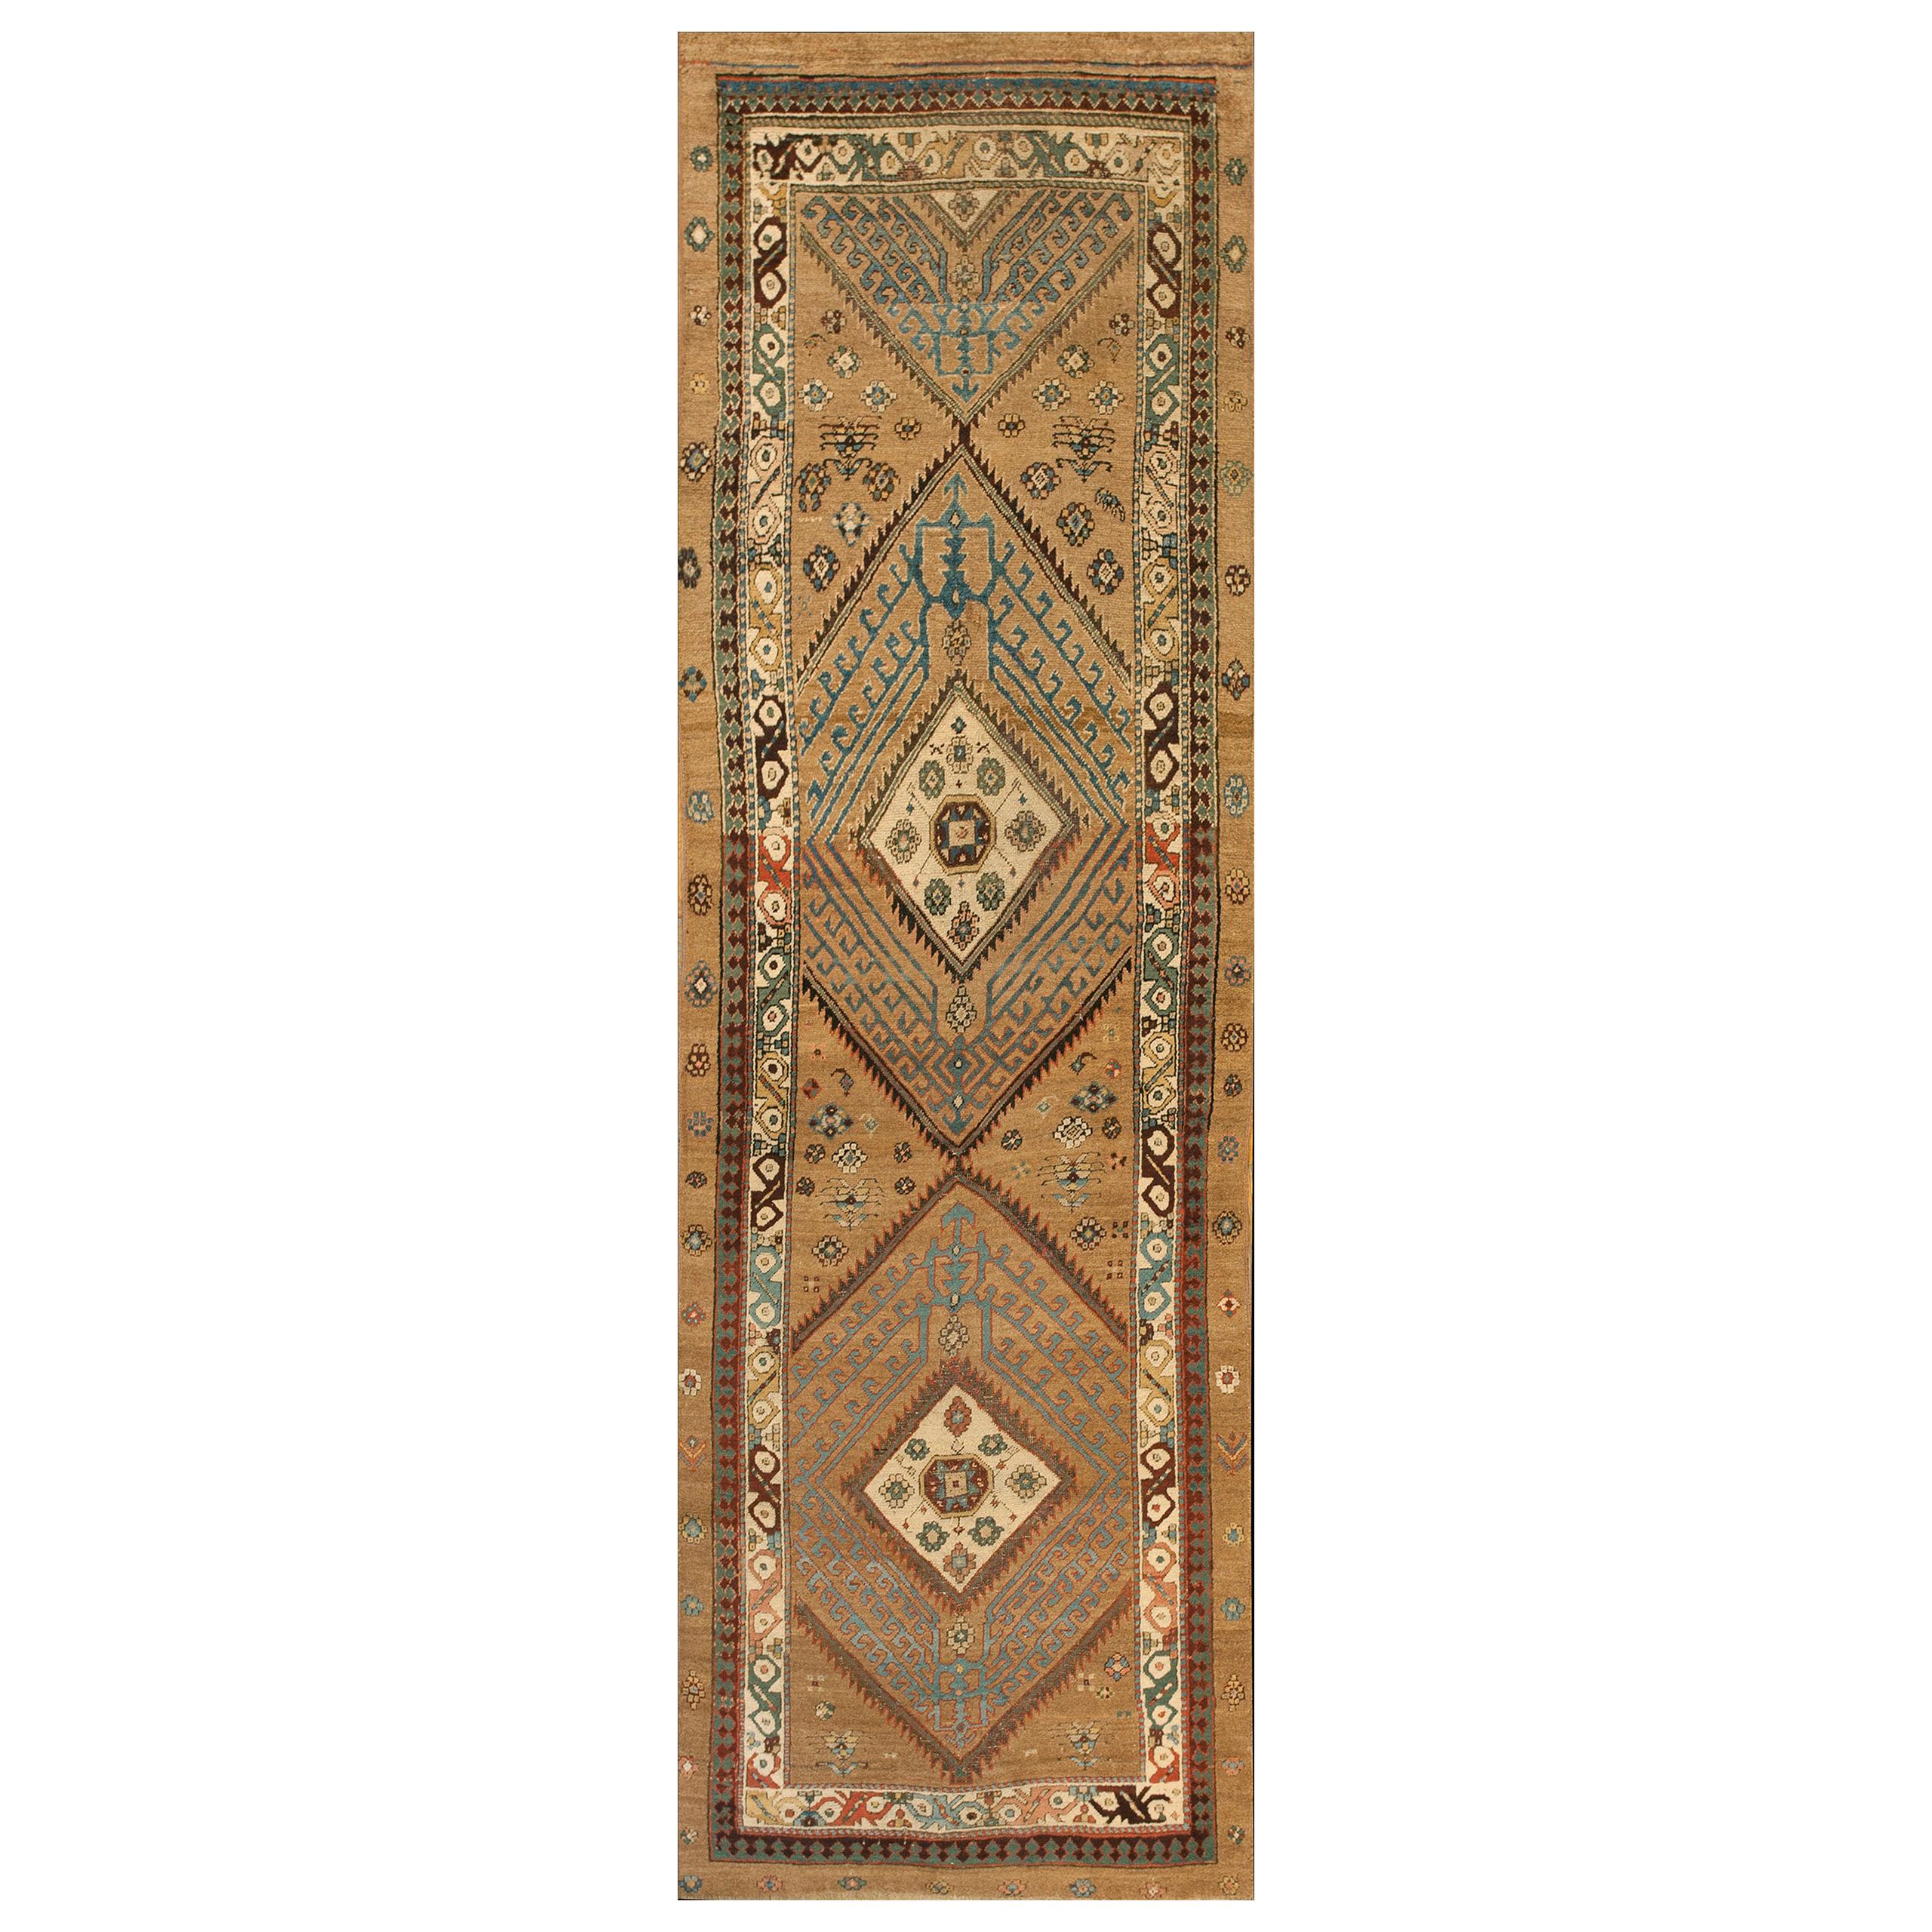 Late 19th Century N.W. Persian Serab Runner Carpet ( 3'3" x 10'4" - 99 x 315 ) For Sale